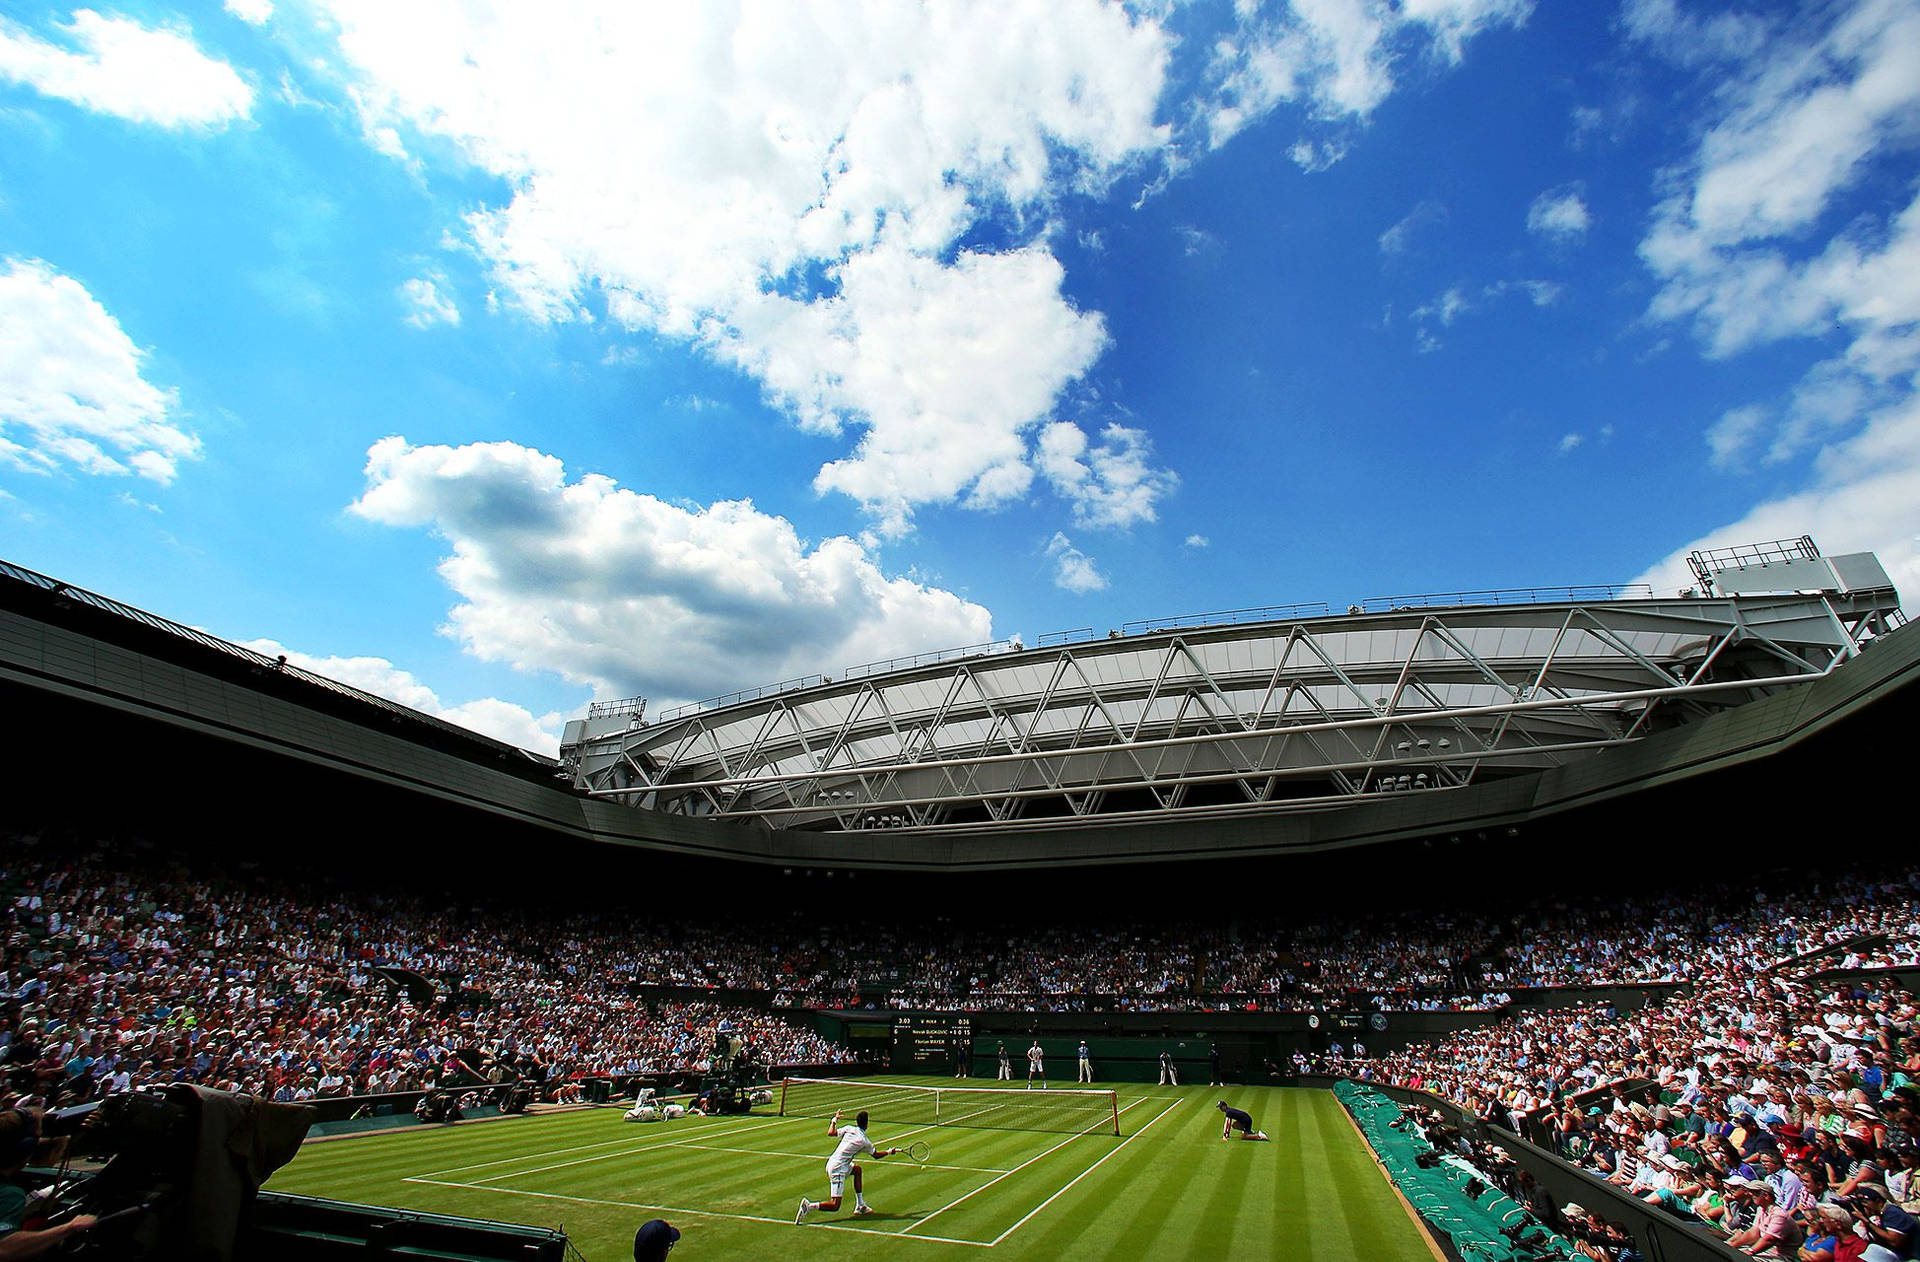 Spectacular Wimbledon Open Roof Stadium in Full Swing. Wallpaper